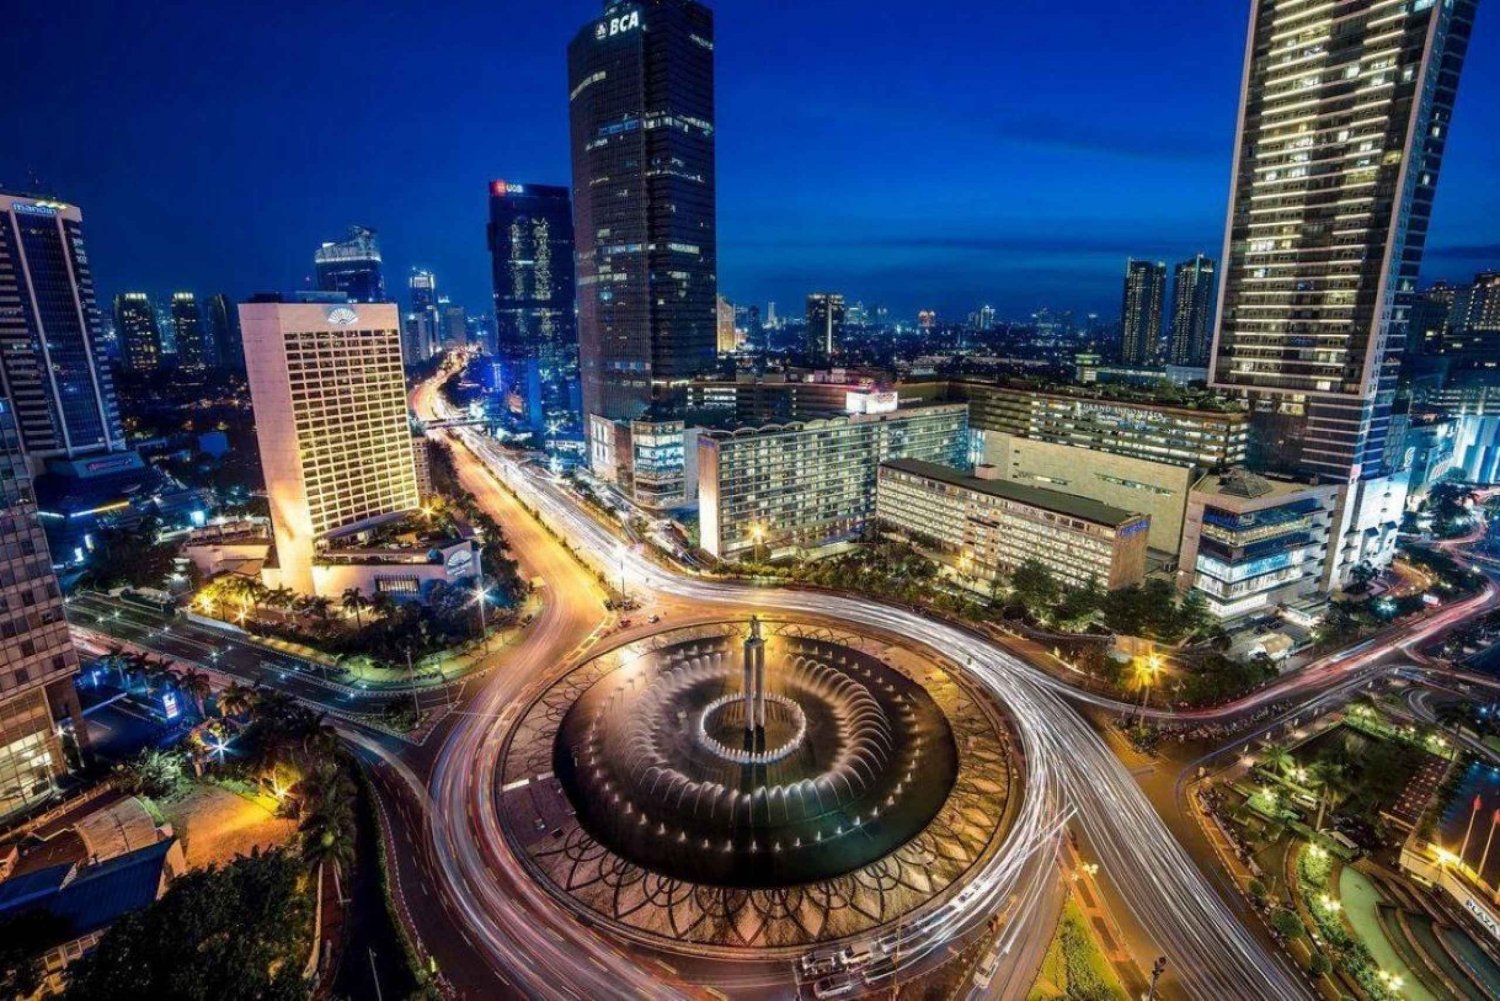 Jakarta Landmarks and Shopping Tour